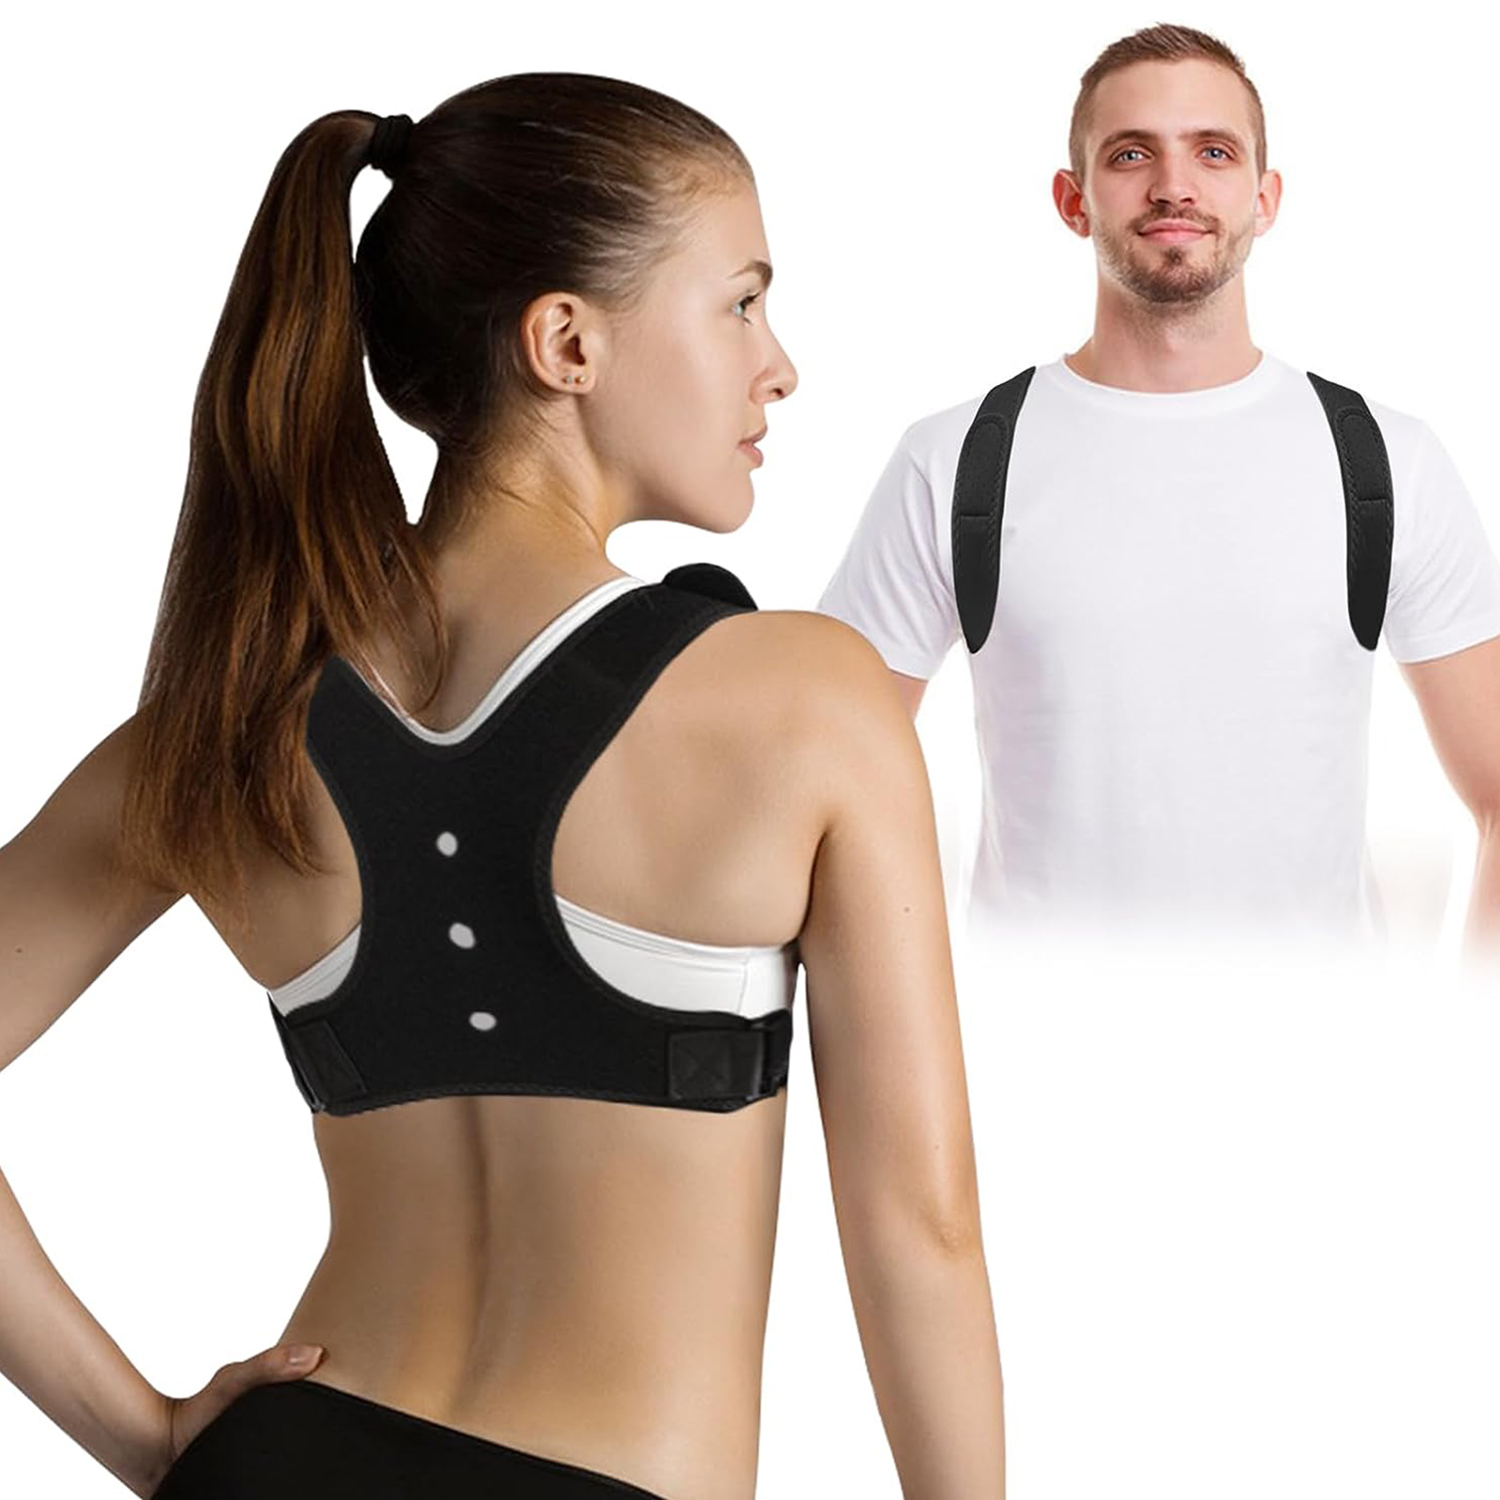 Posture Corrector Back Brace - Adjustable Breathable Clavicle